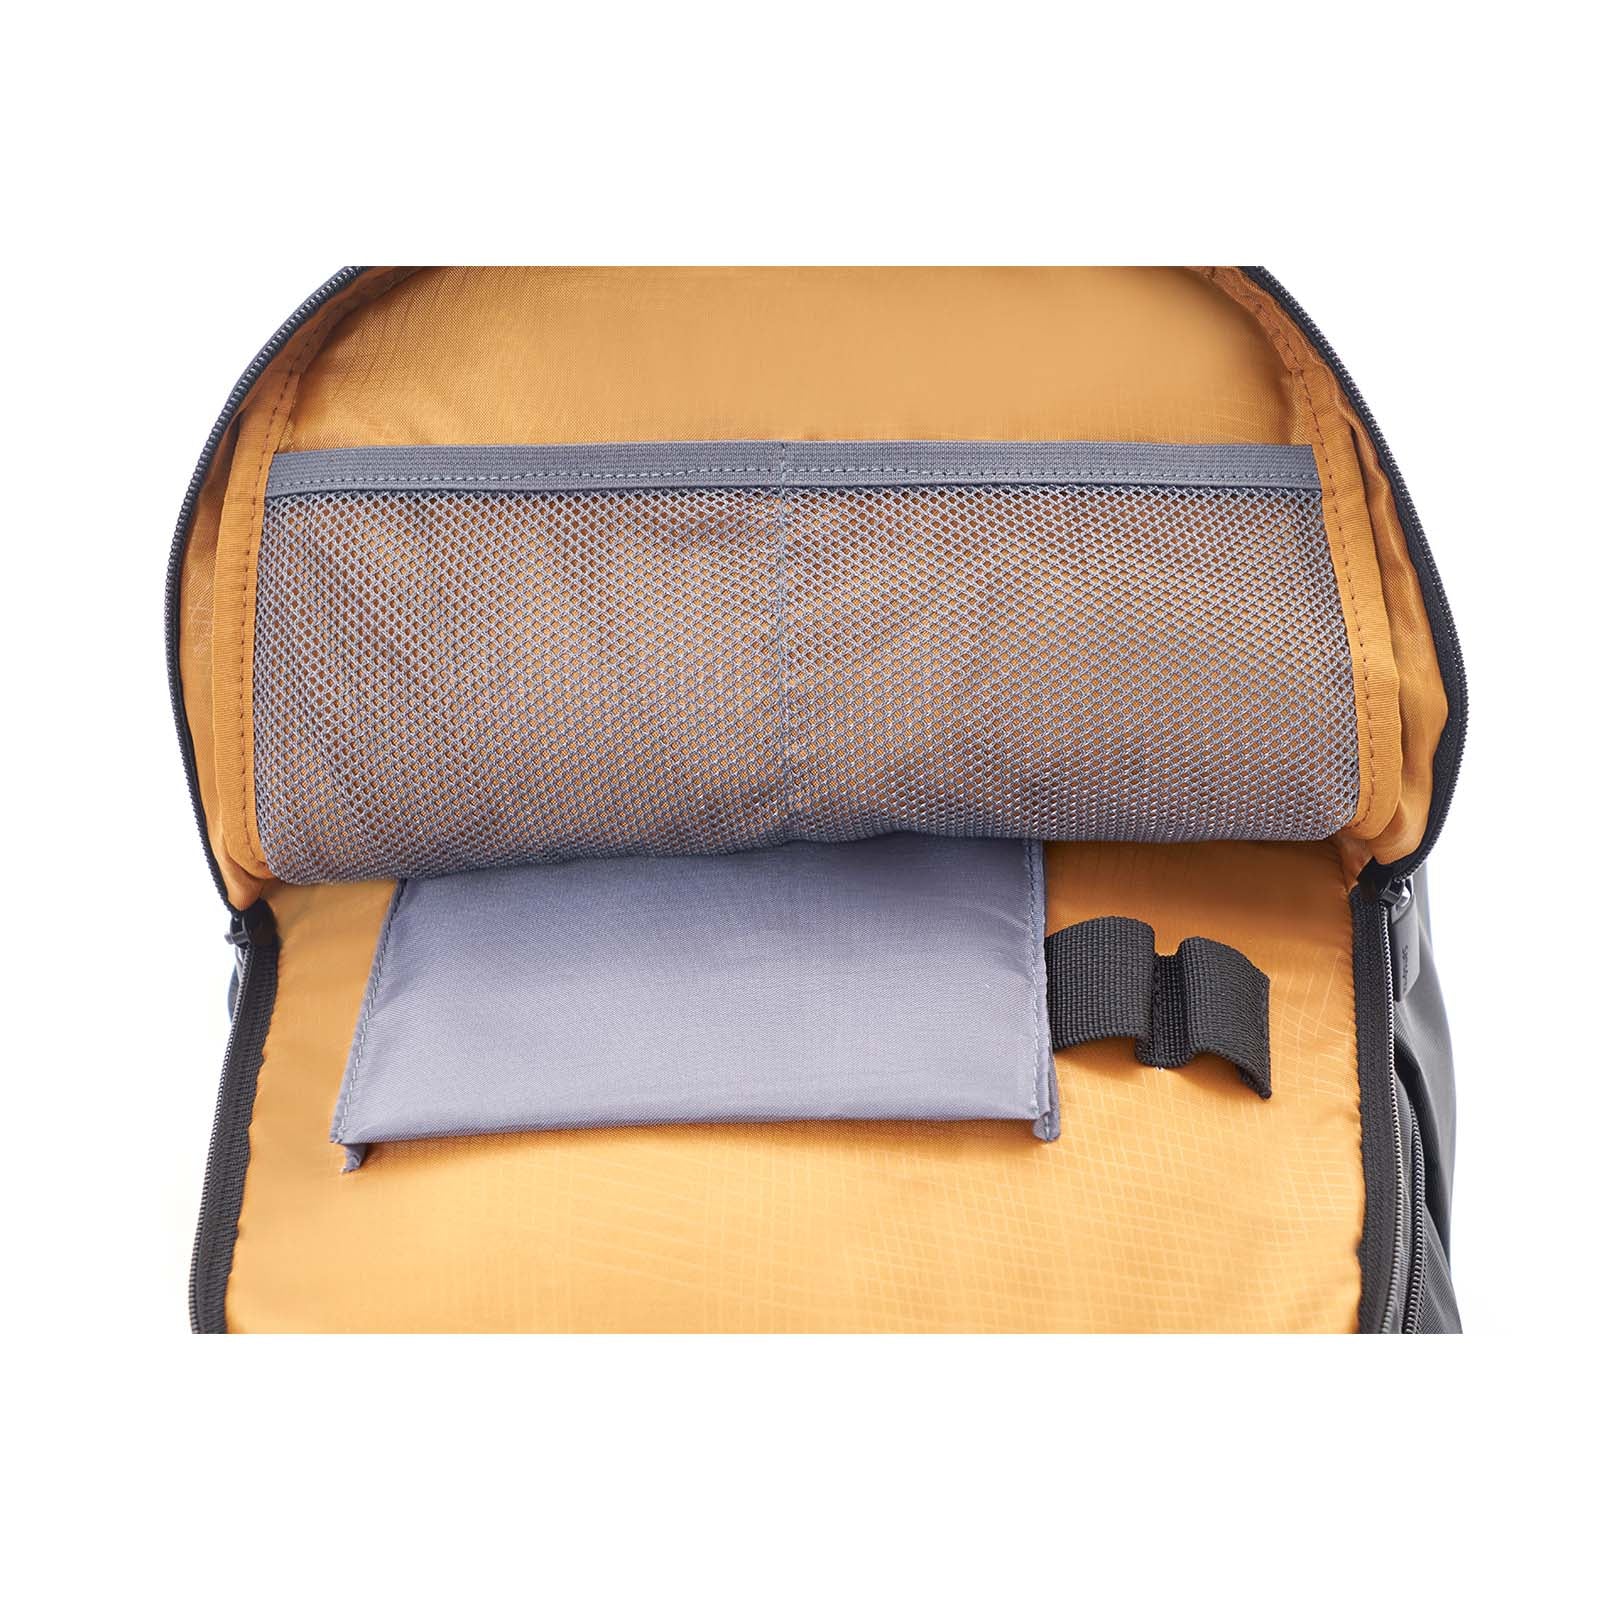 Samsonite Squad 15.6 Inch Laptop Backpack Black